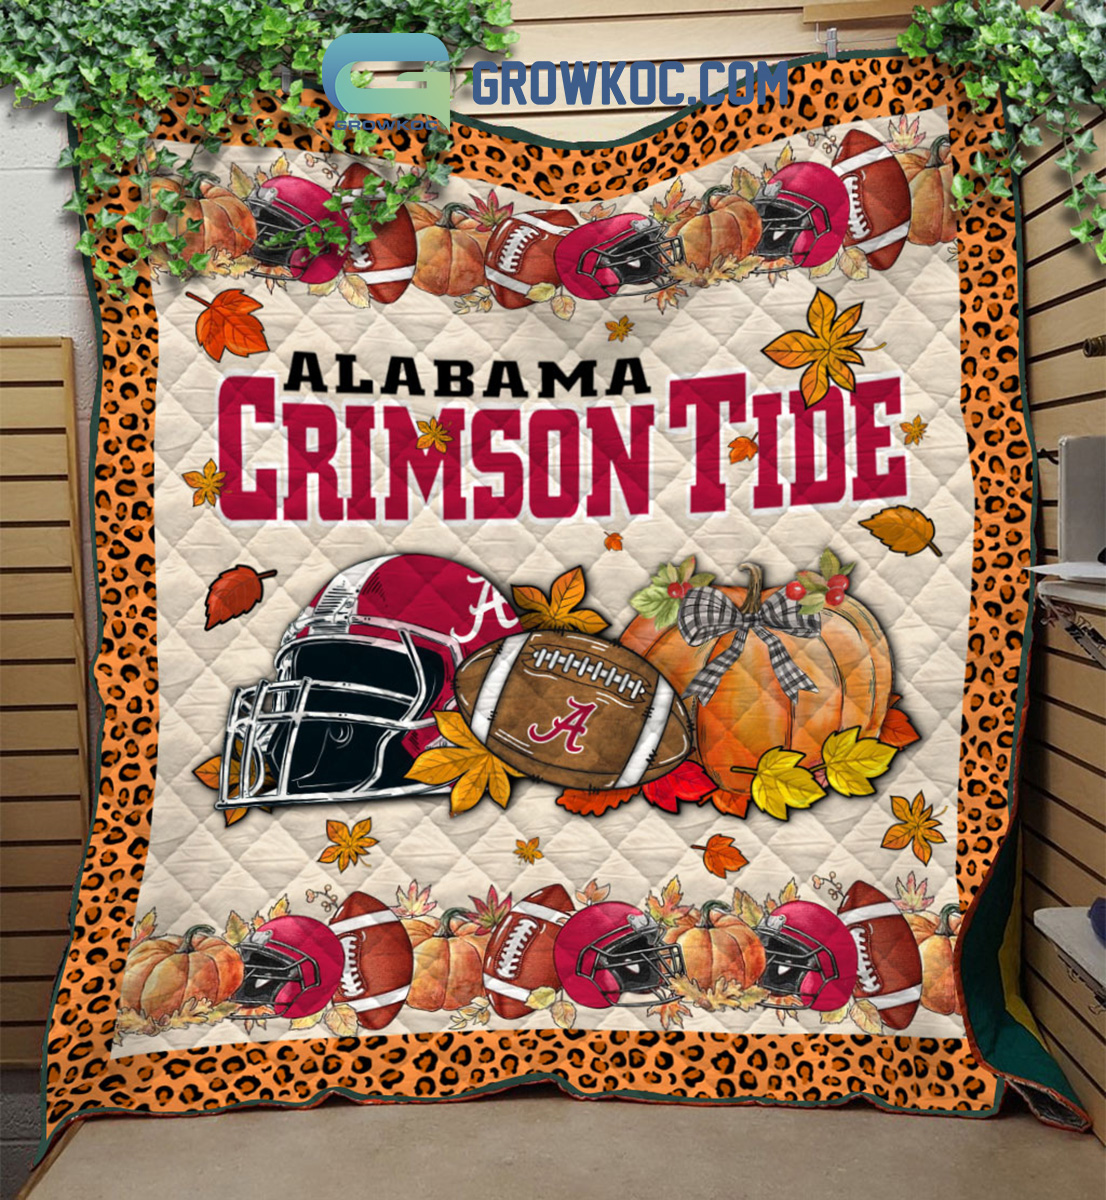 Alabama Crimson Tide NCAA Football Welcome Fall Pumpkin Halloween Fleece Blanket Quilt